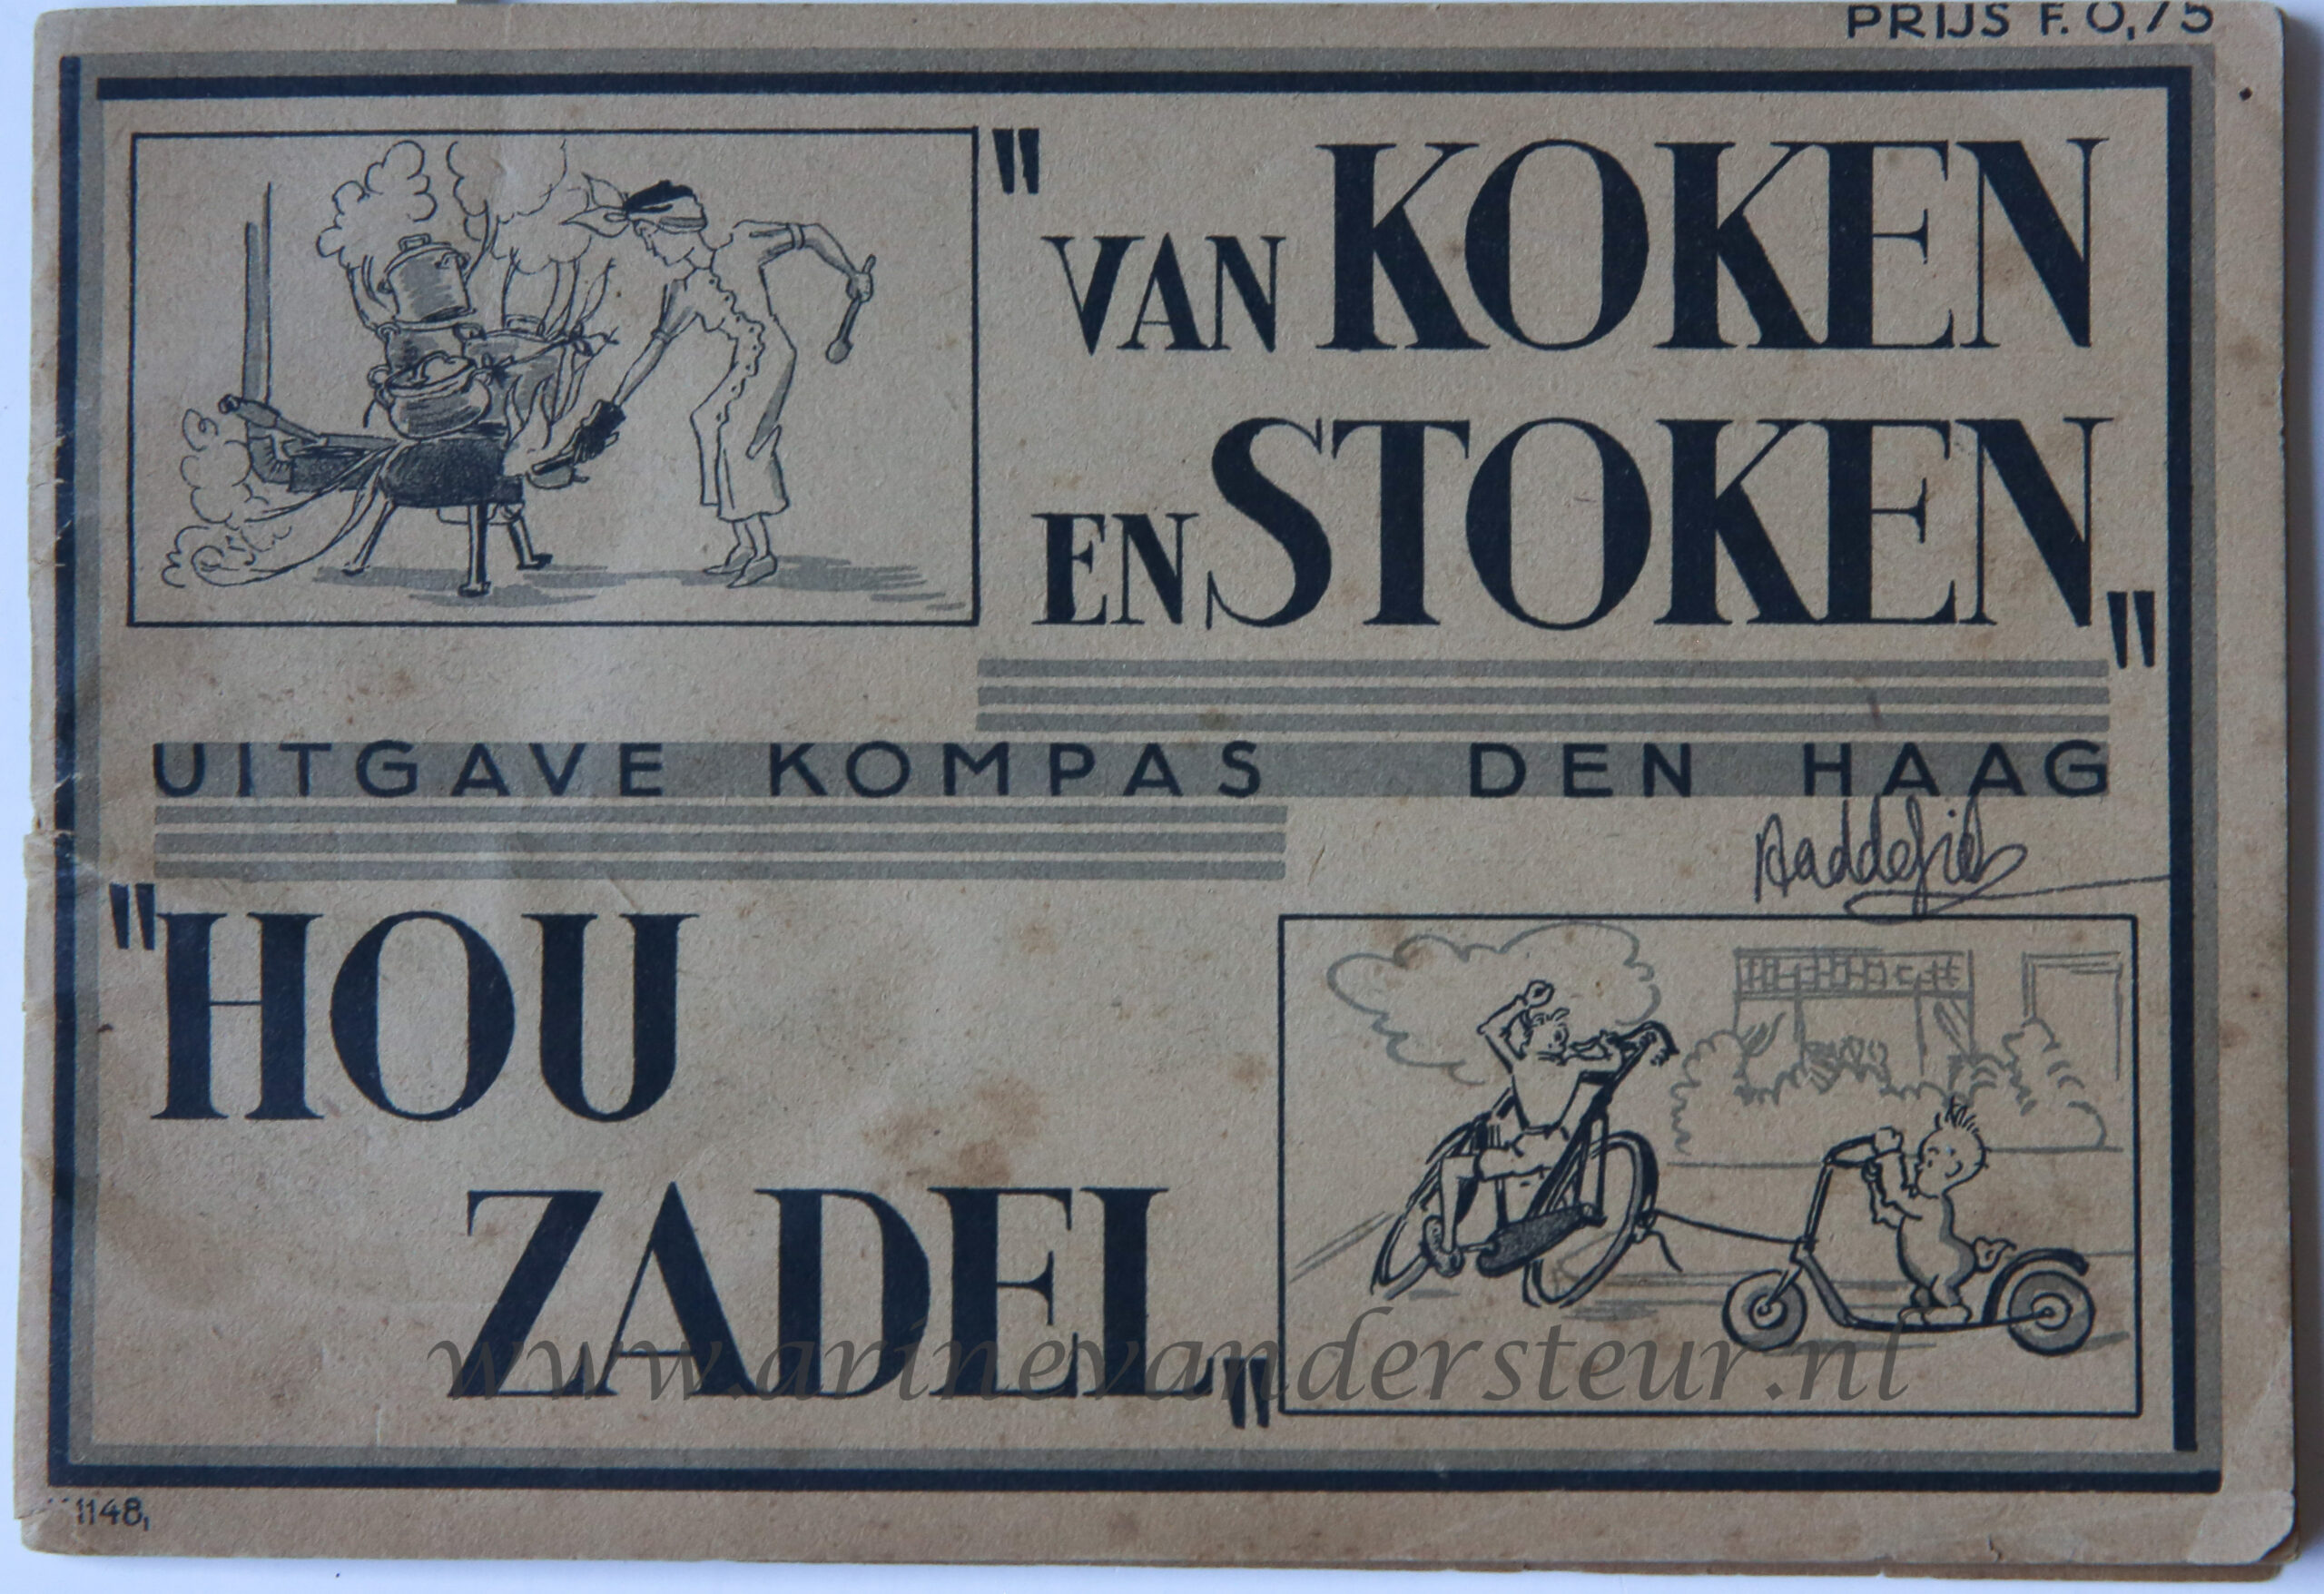 [WO II] Van Koken en Stoken, Hou Zadel, Uitgave Kompas Den Haag, [ca 1945], Illustrations by Jan Lavies, 30 pp.